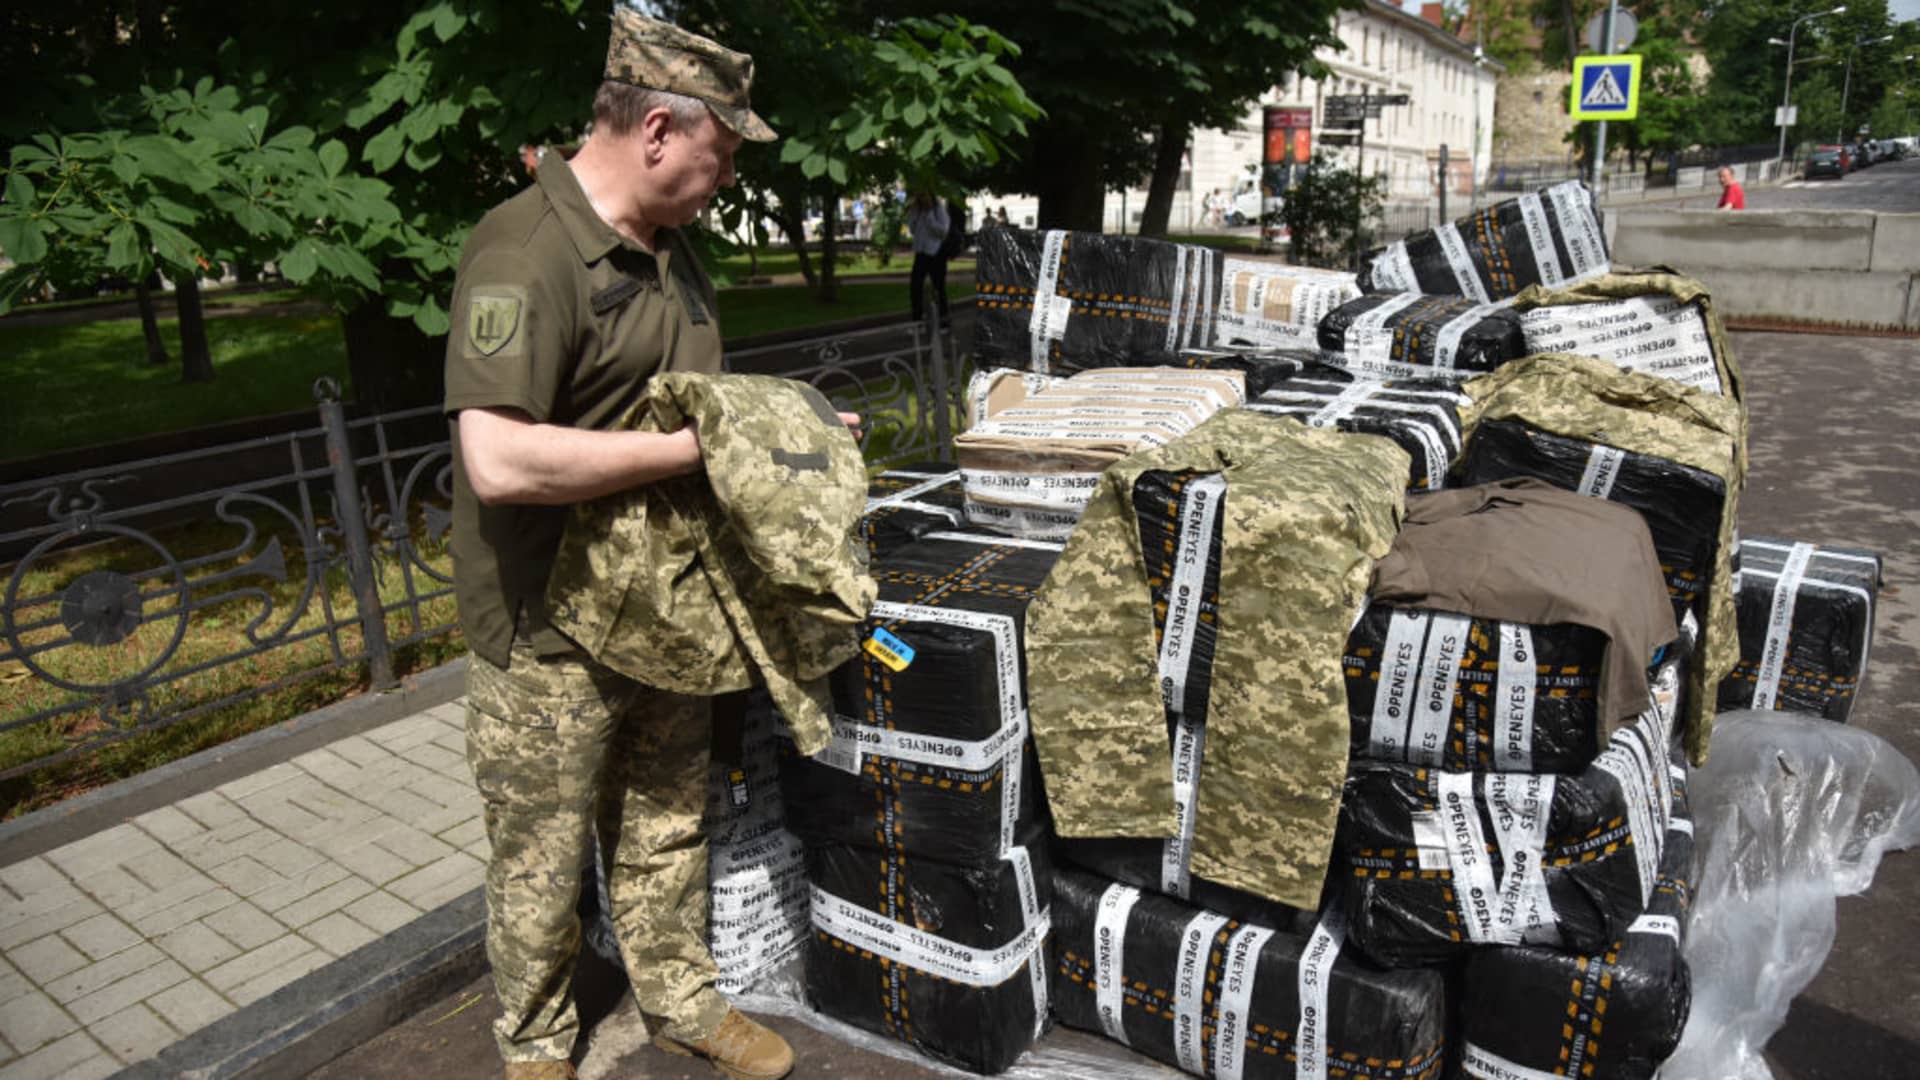 A Ukrainian military man examines improved summer uniforms for the Ukrainian army in Lviv, Ukraine on June 9, 2023.